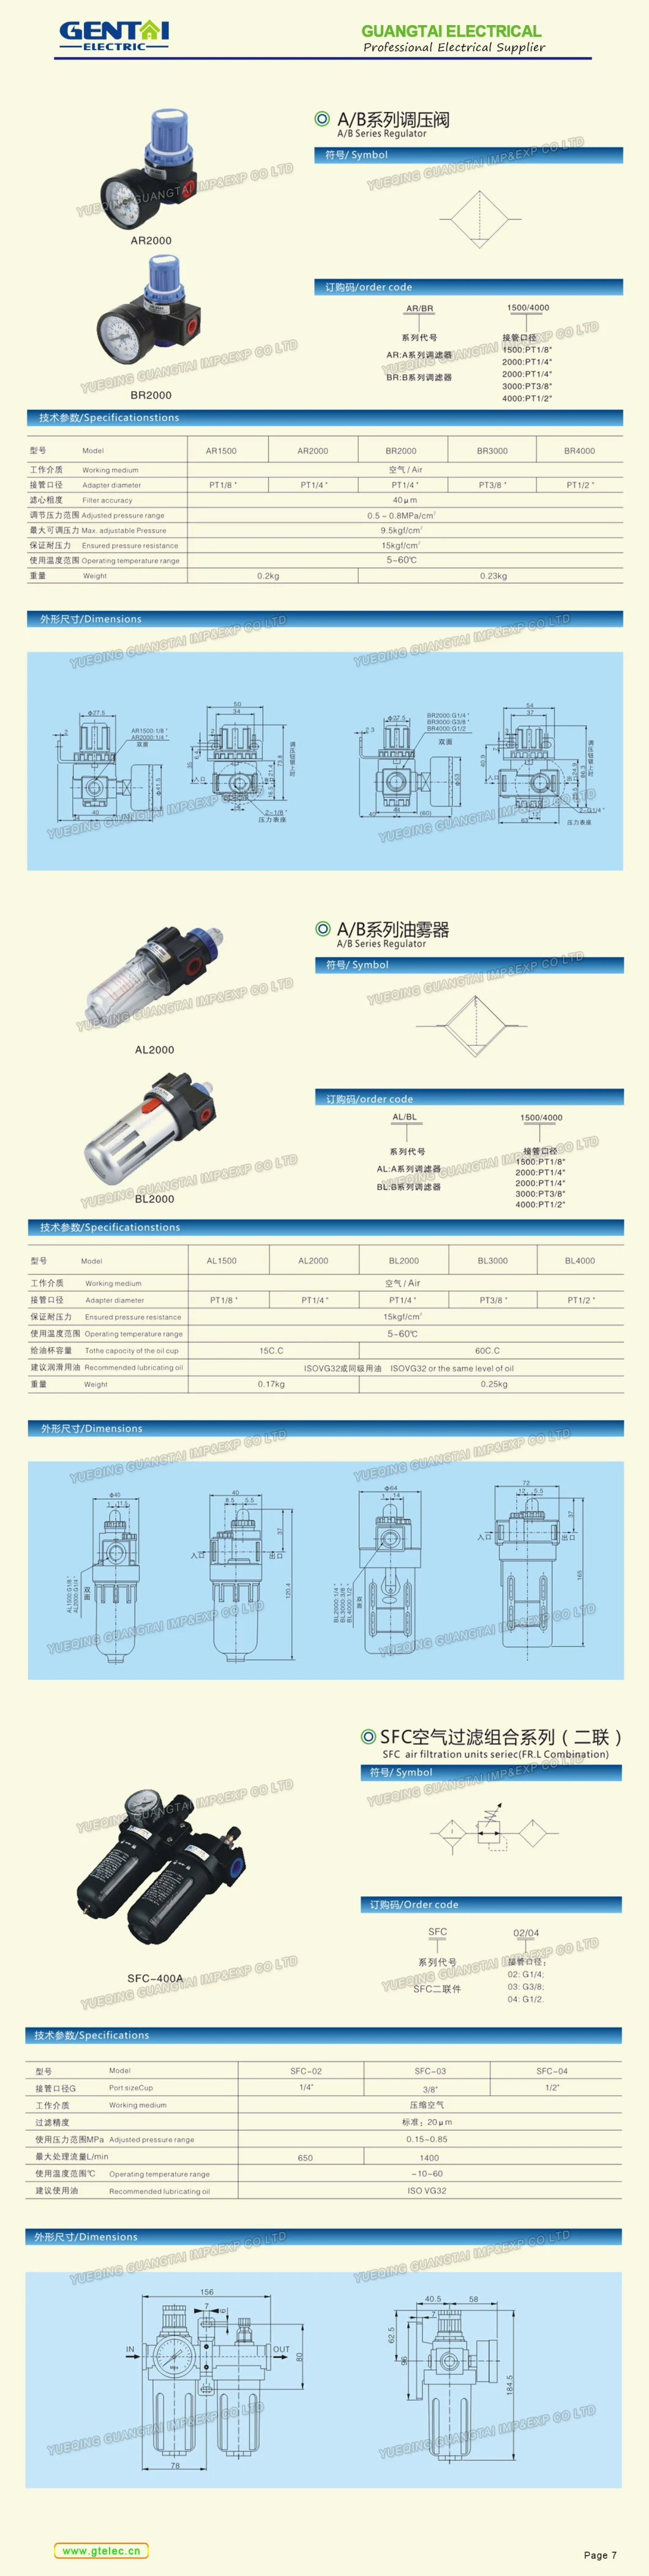 AC2010-02 Pneumatic Two Unit Frl Combination Air Filter Regulator & Lubricator